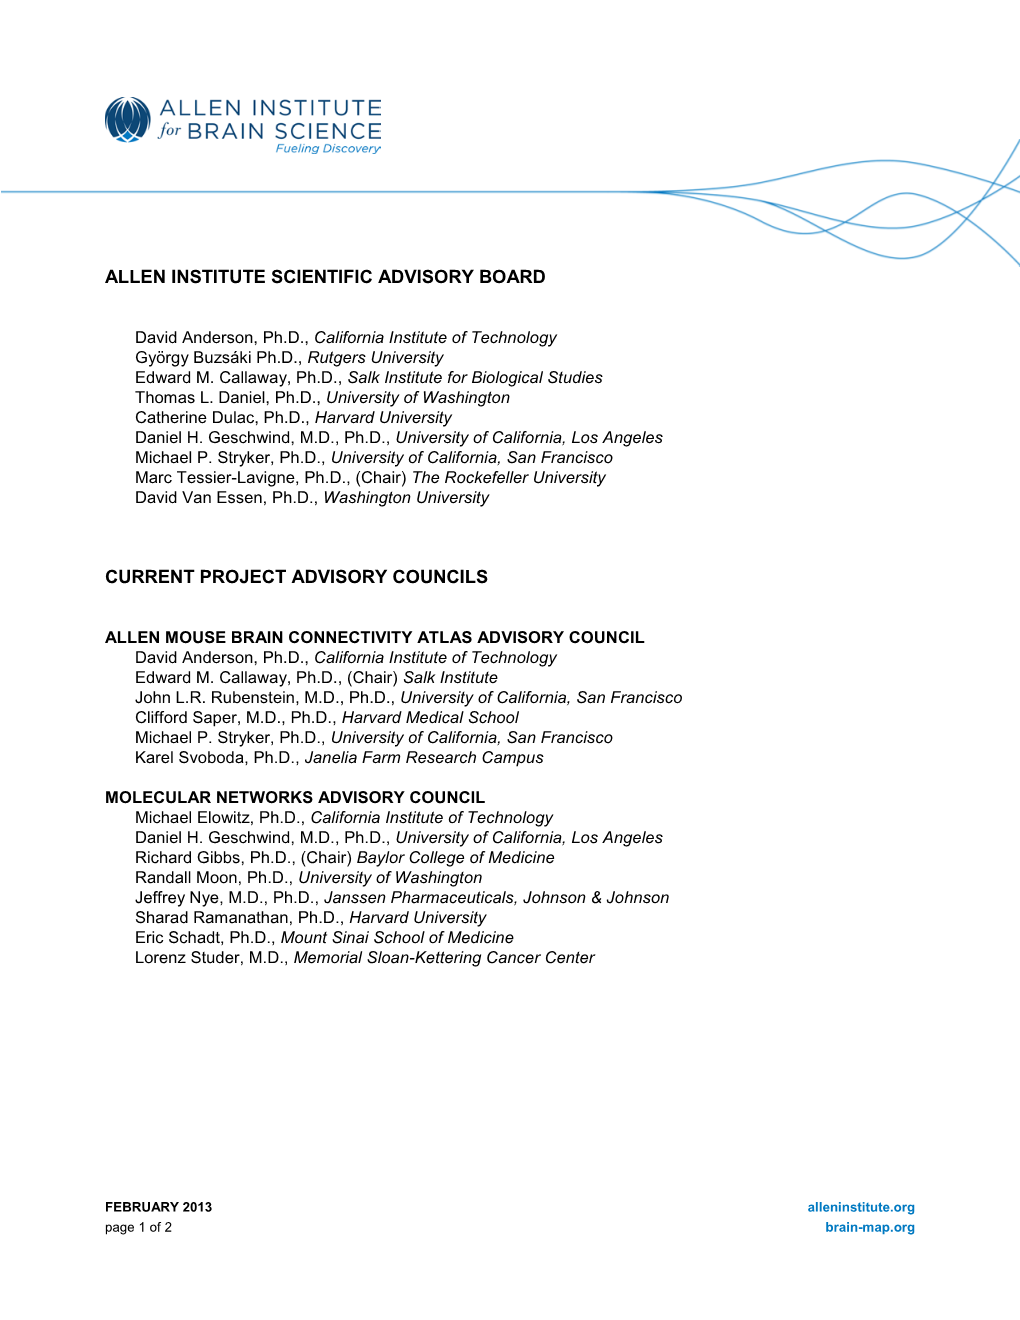 Allen Institute Scientific Advisory Board Current